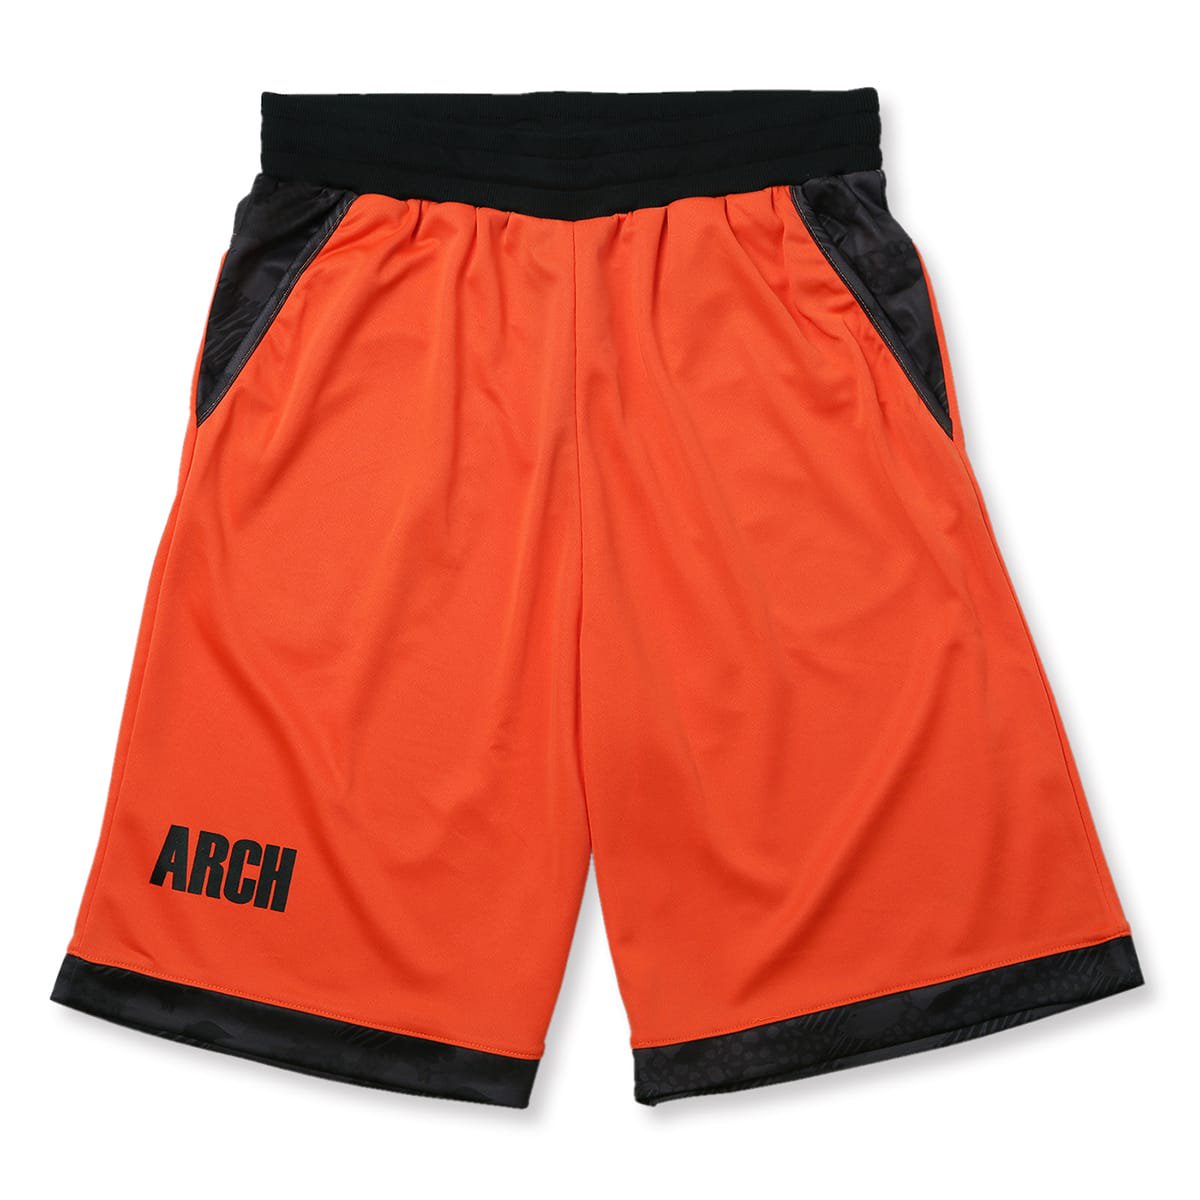 LGZ camo shorts【orange】